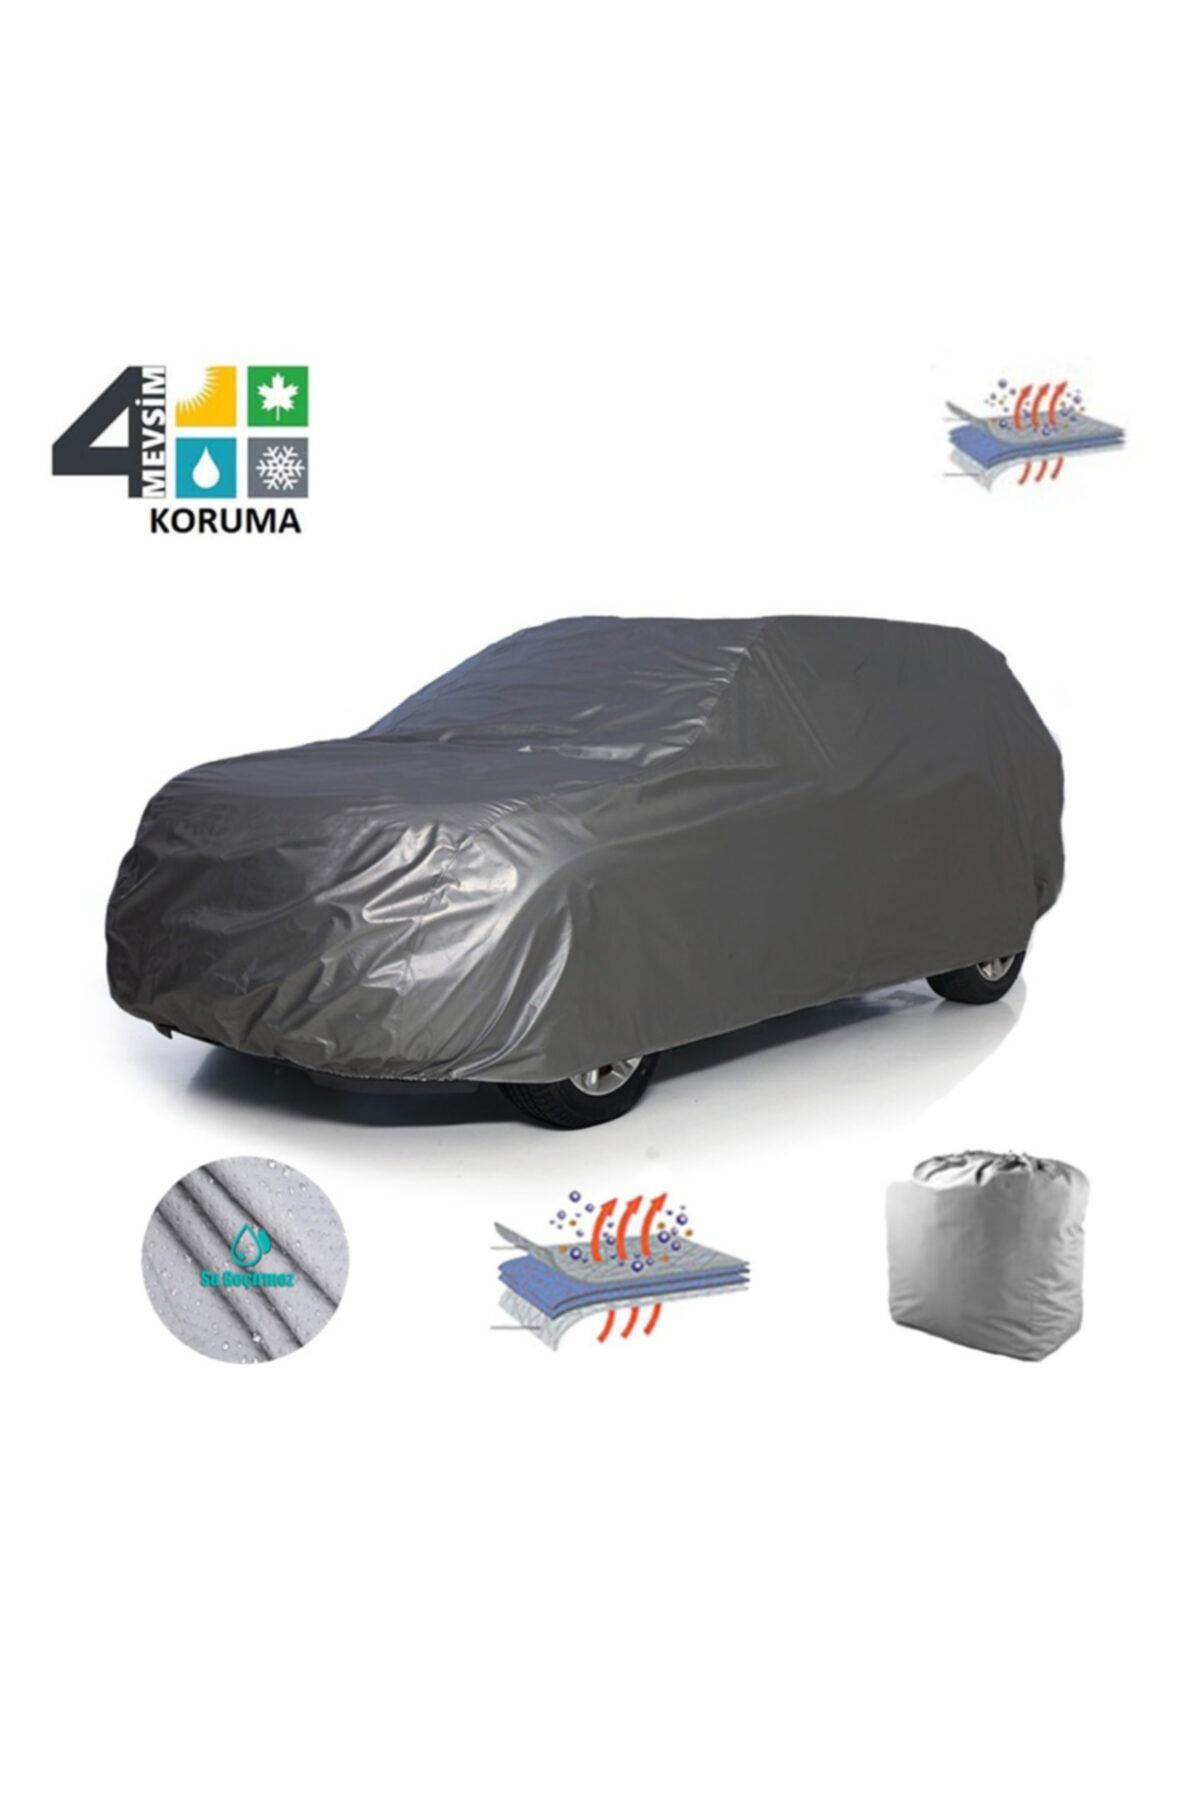 ENCAR Dacia Sandero Stepway Car Tarpaulin, Cover, Tent